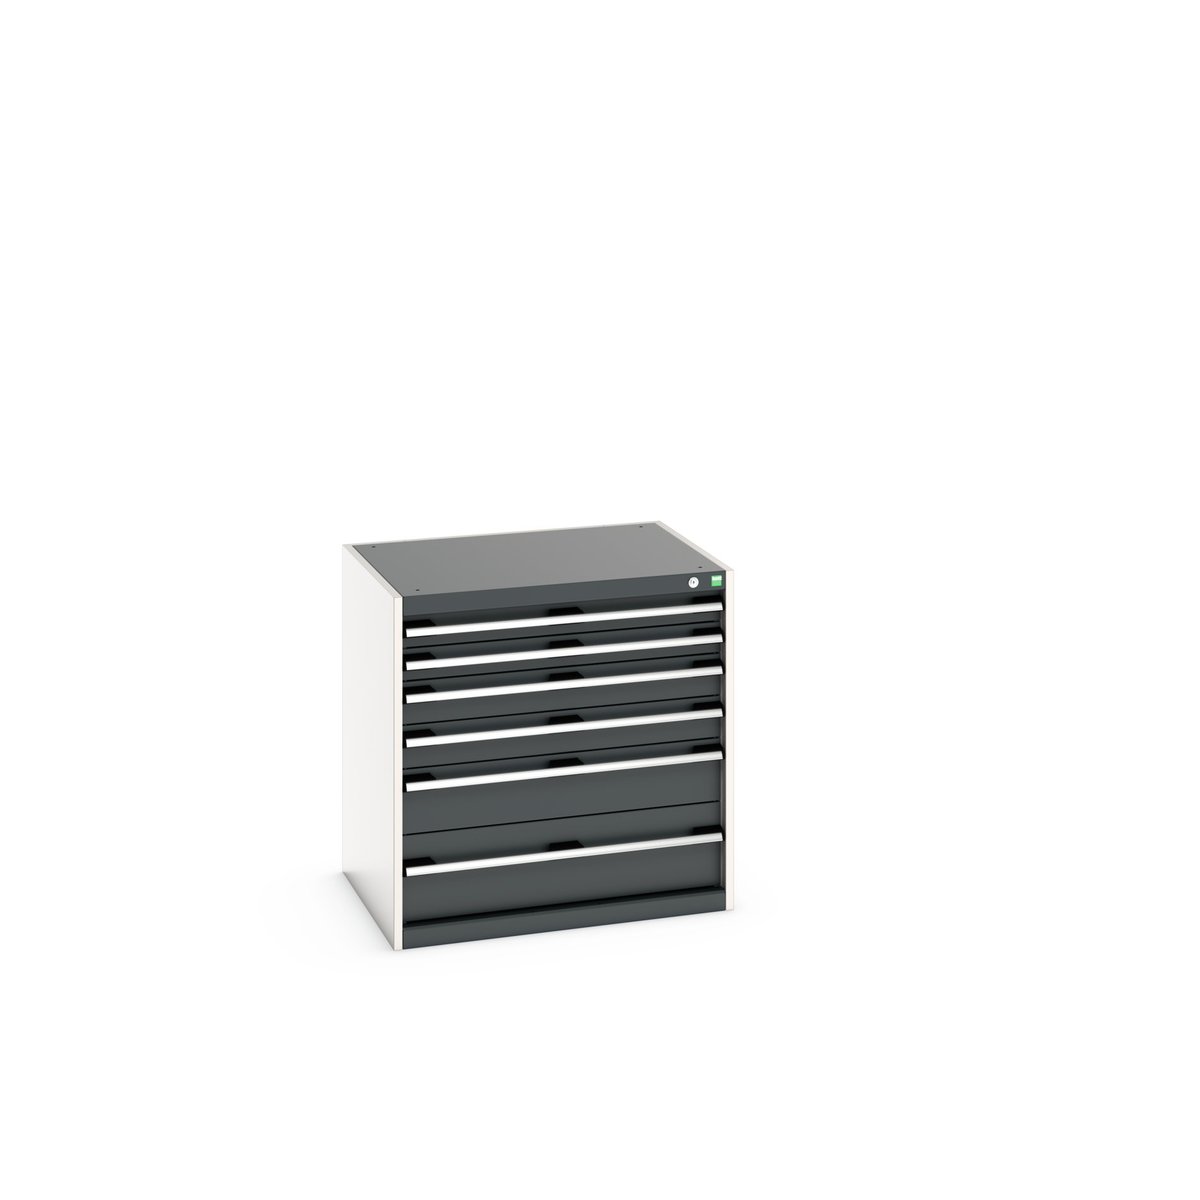 40020130. - cubio drawer cabinet